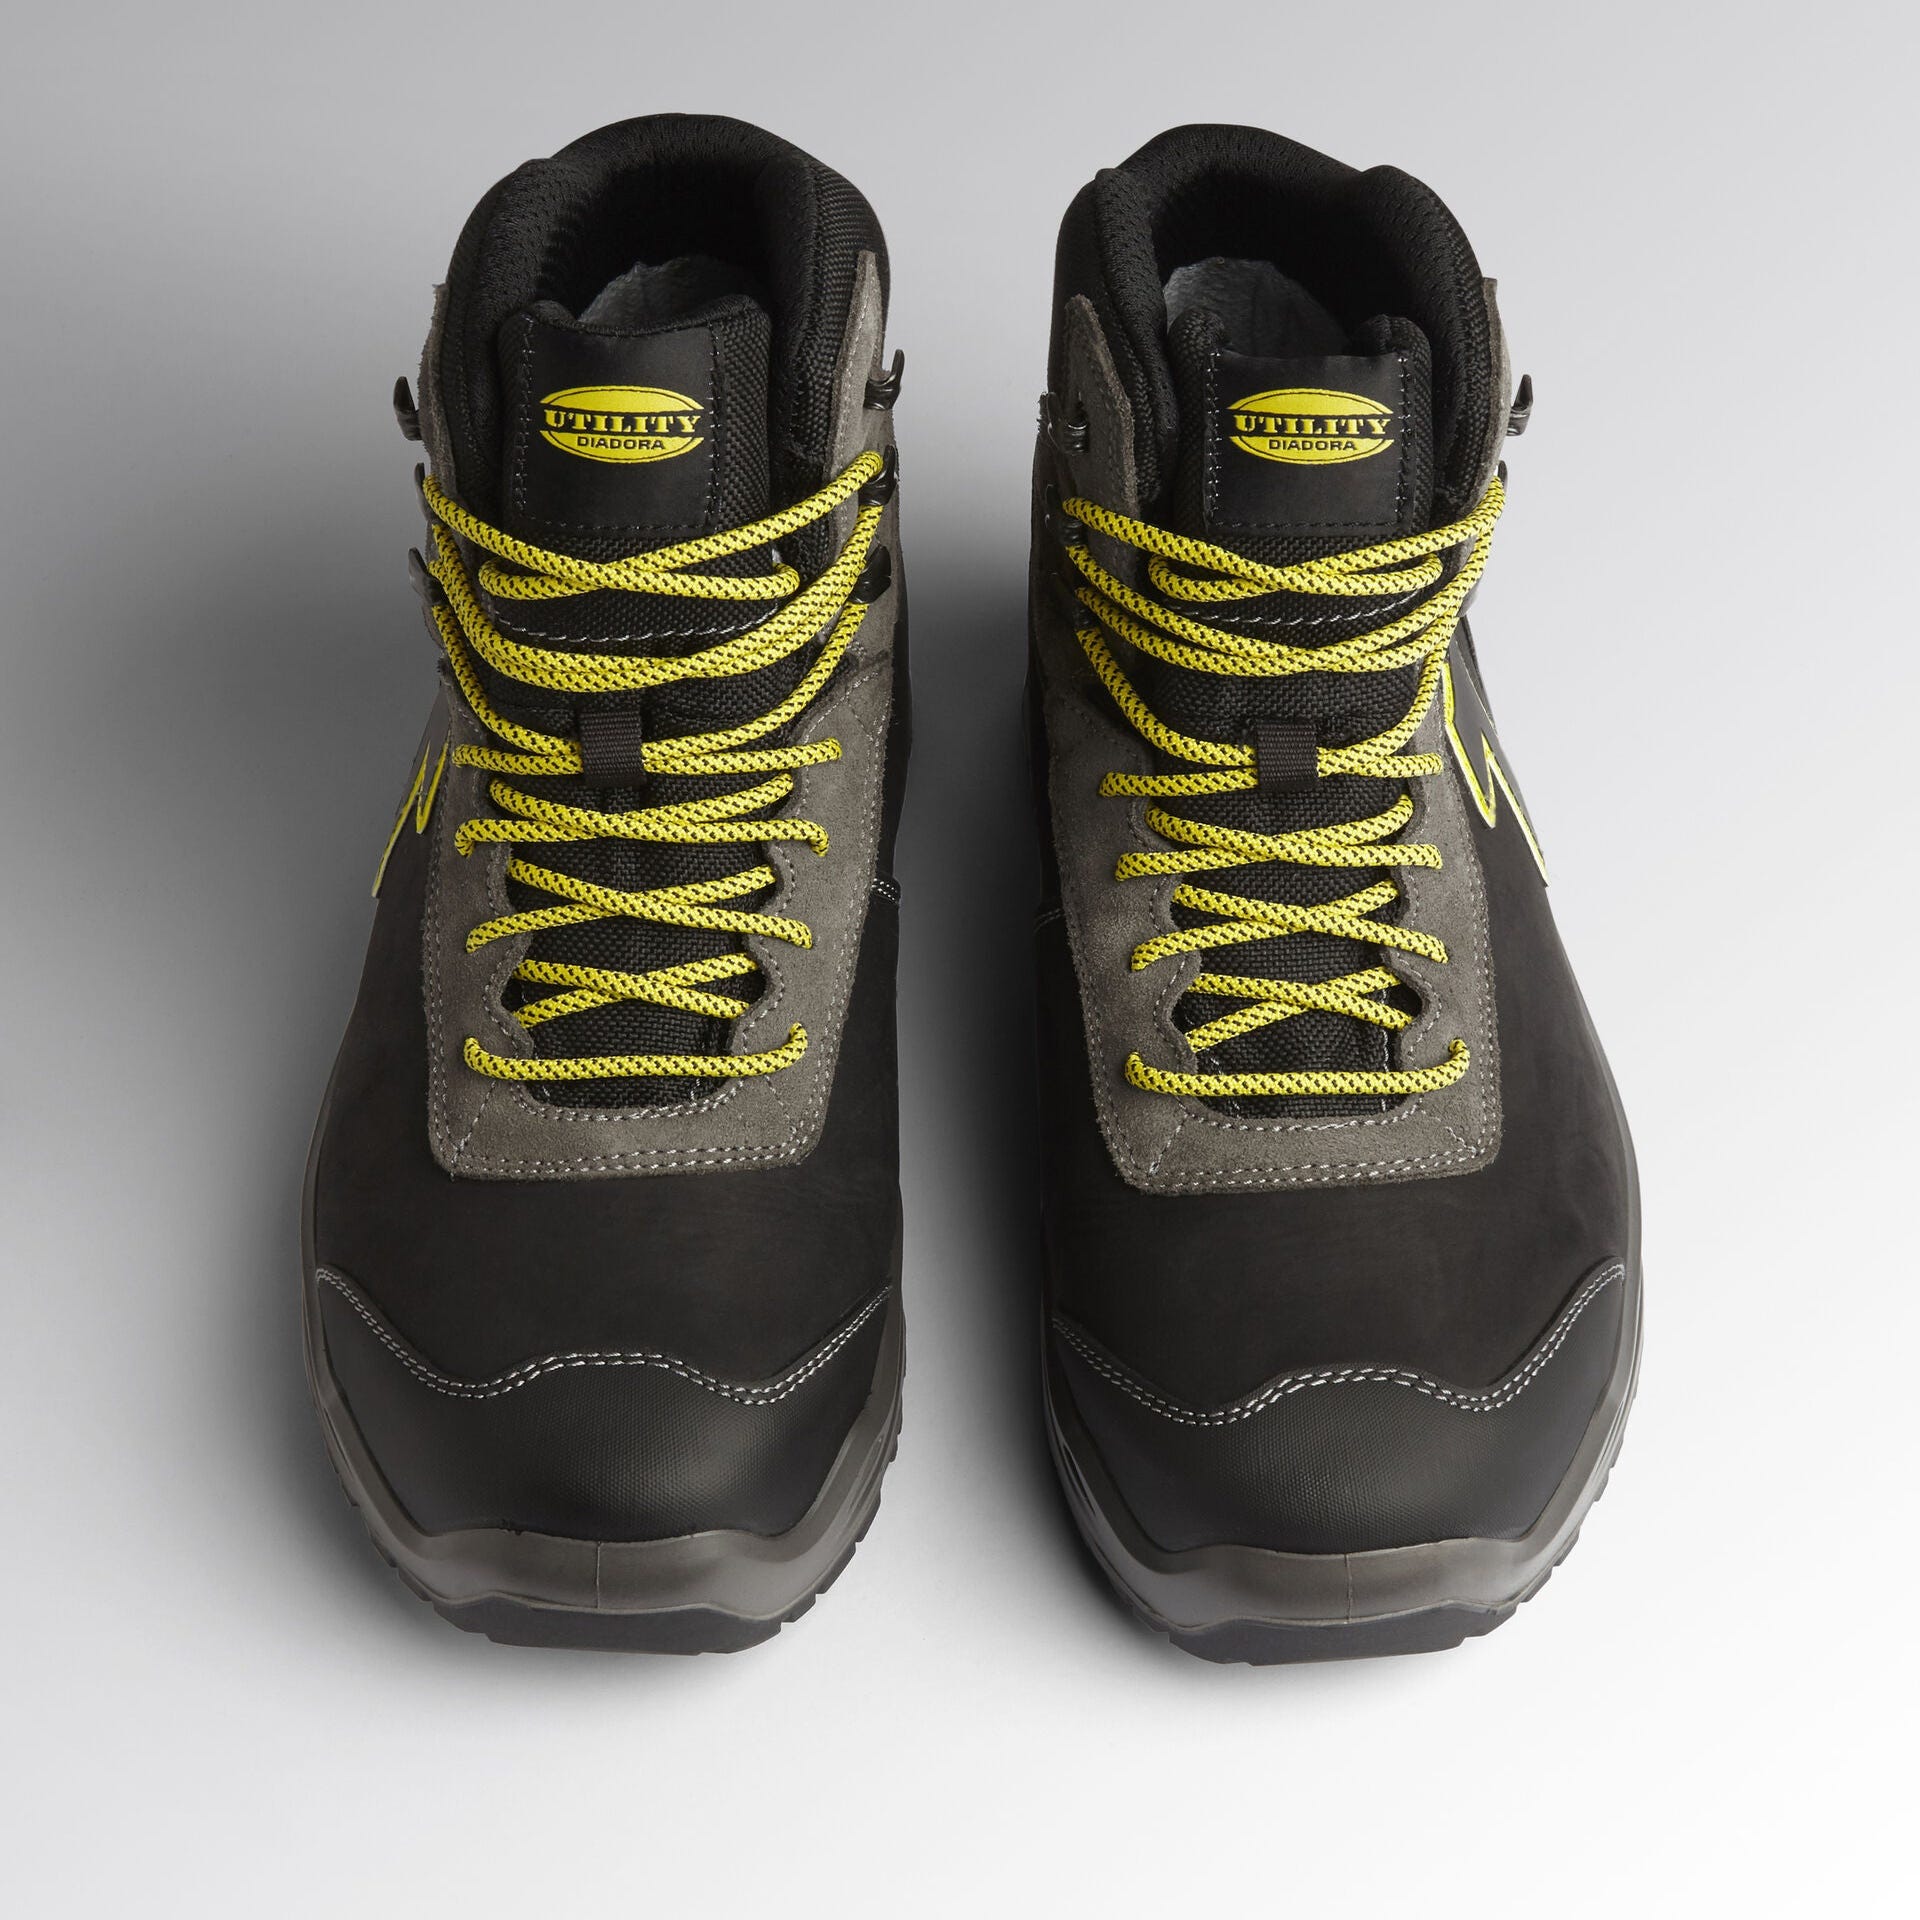 Chaussures S3 imperméables thermo-isolantes Diadora Noir / Jaune 48 7